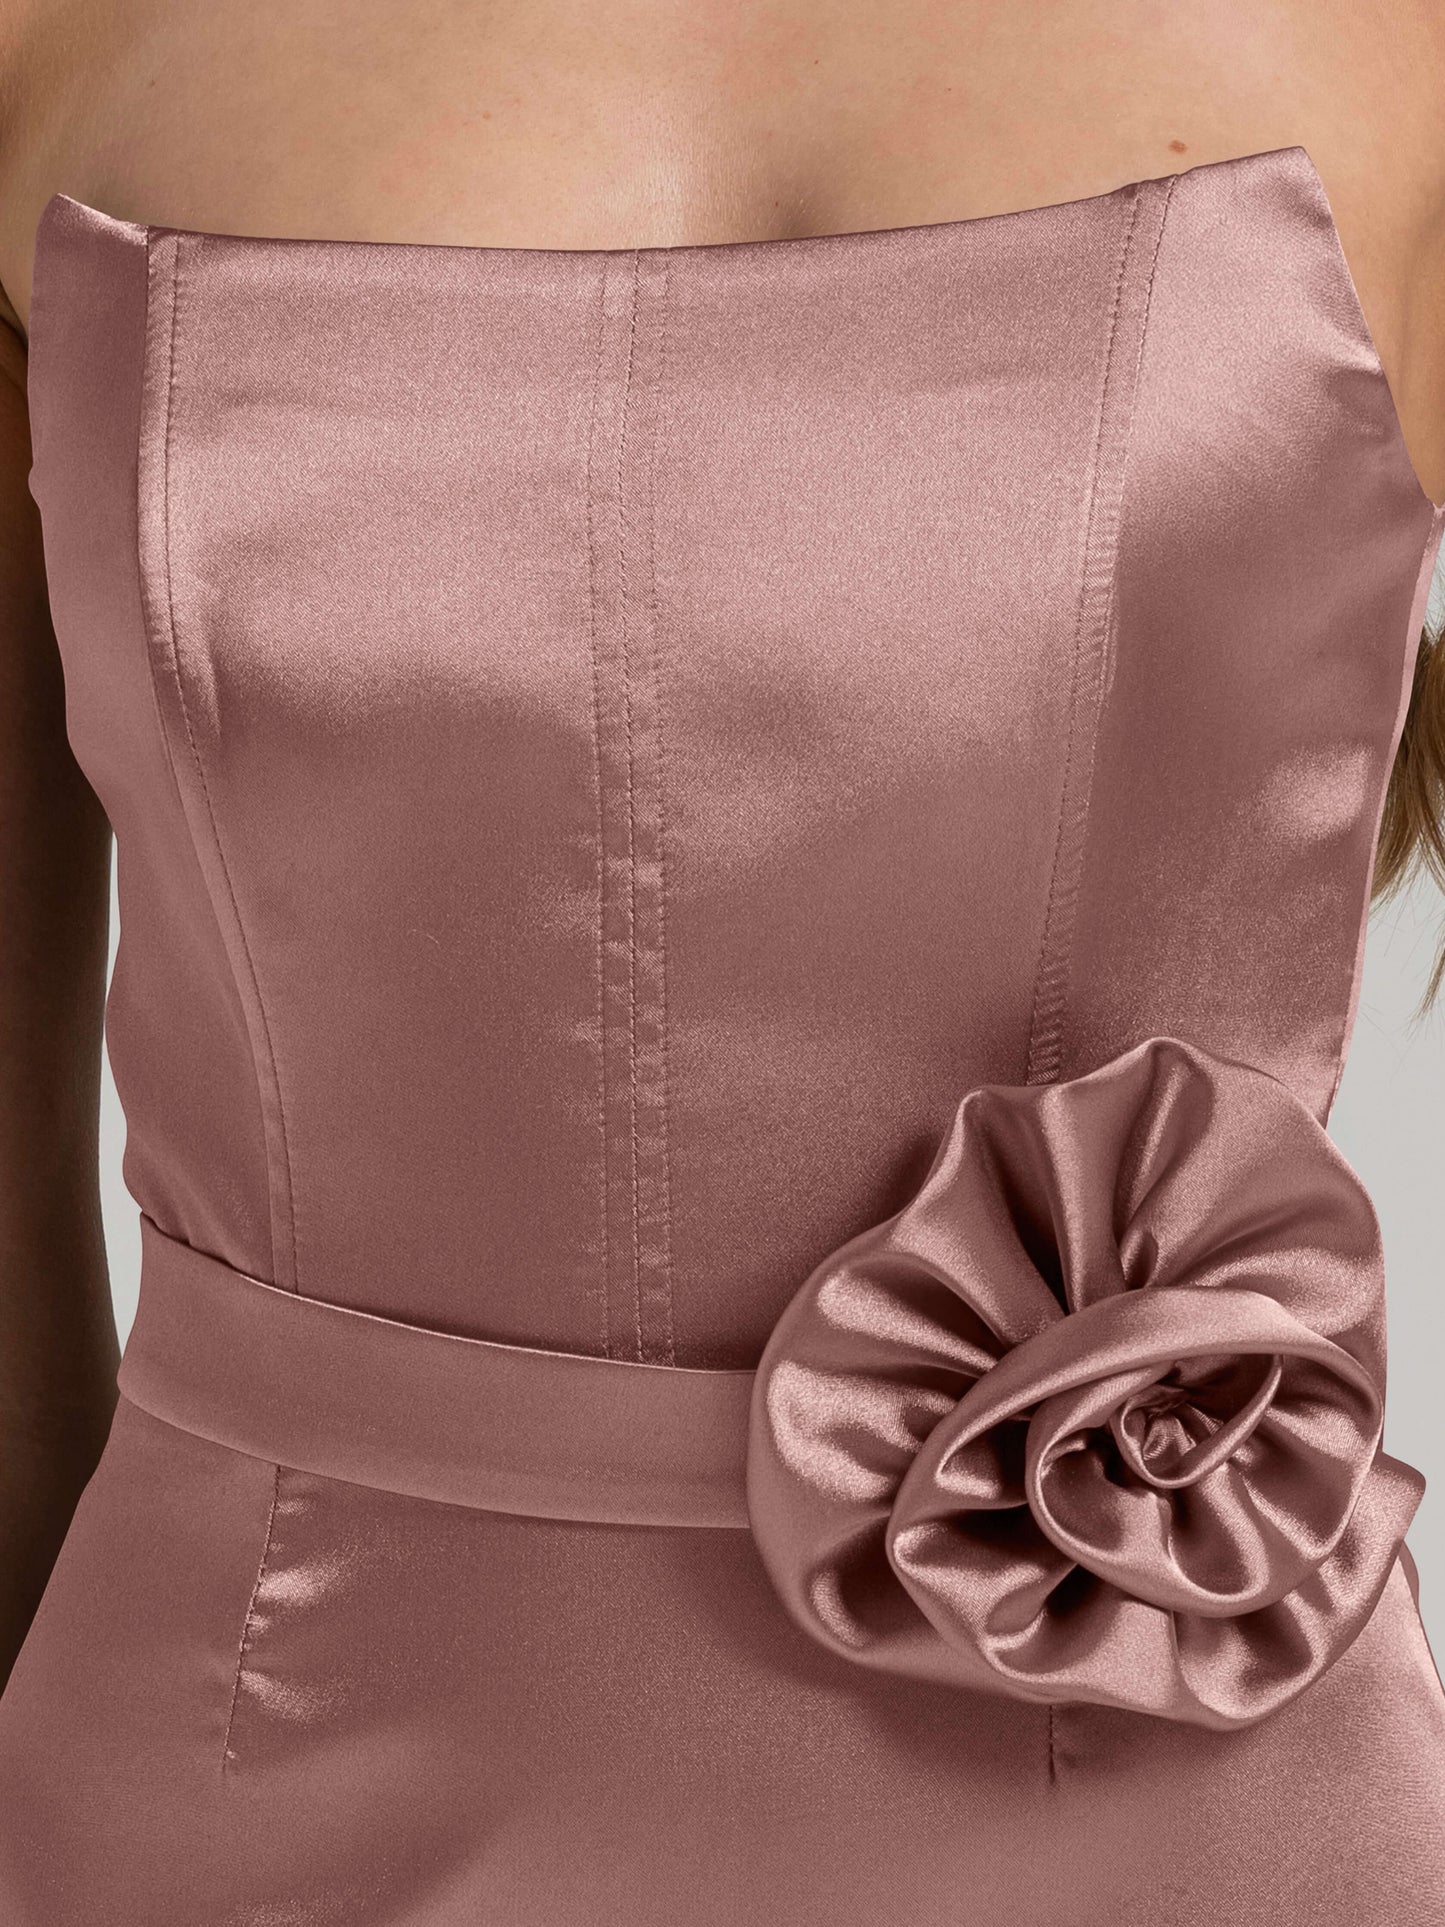 Dazzling Touch Satin Mini Dress - Rose Gold by Tia Dorraine Women's Luxury Fashion Designer Clothing Brand